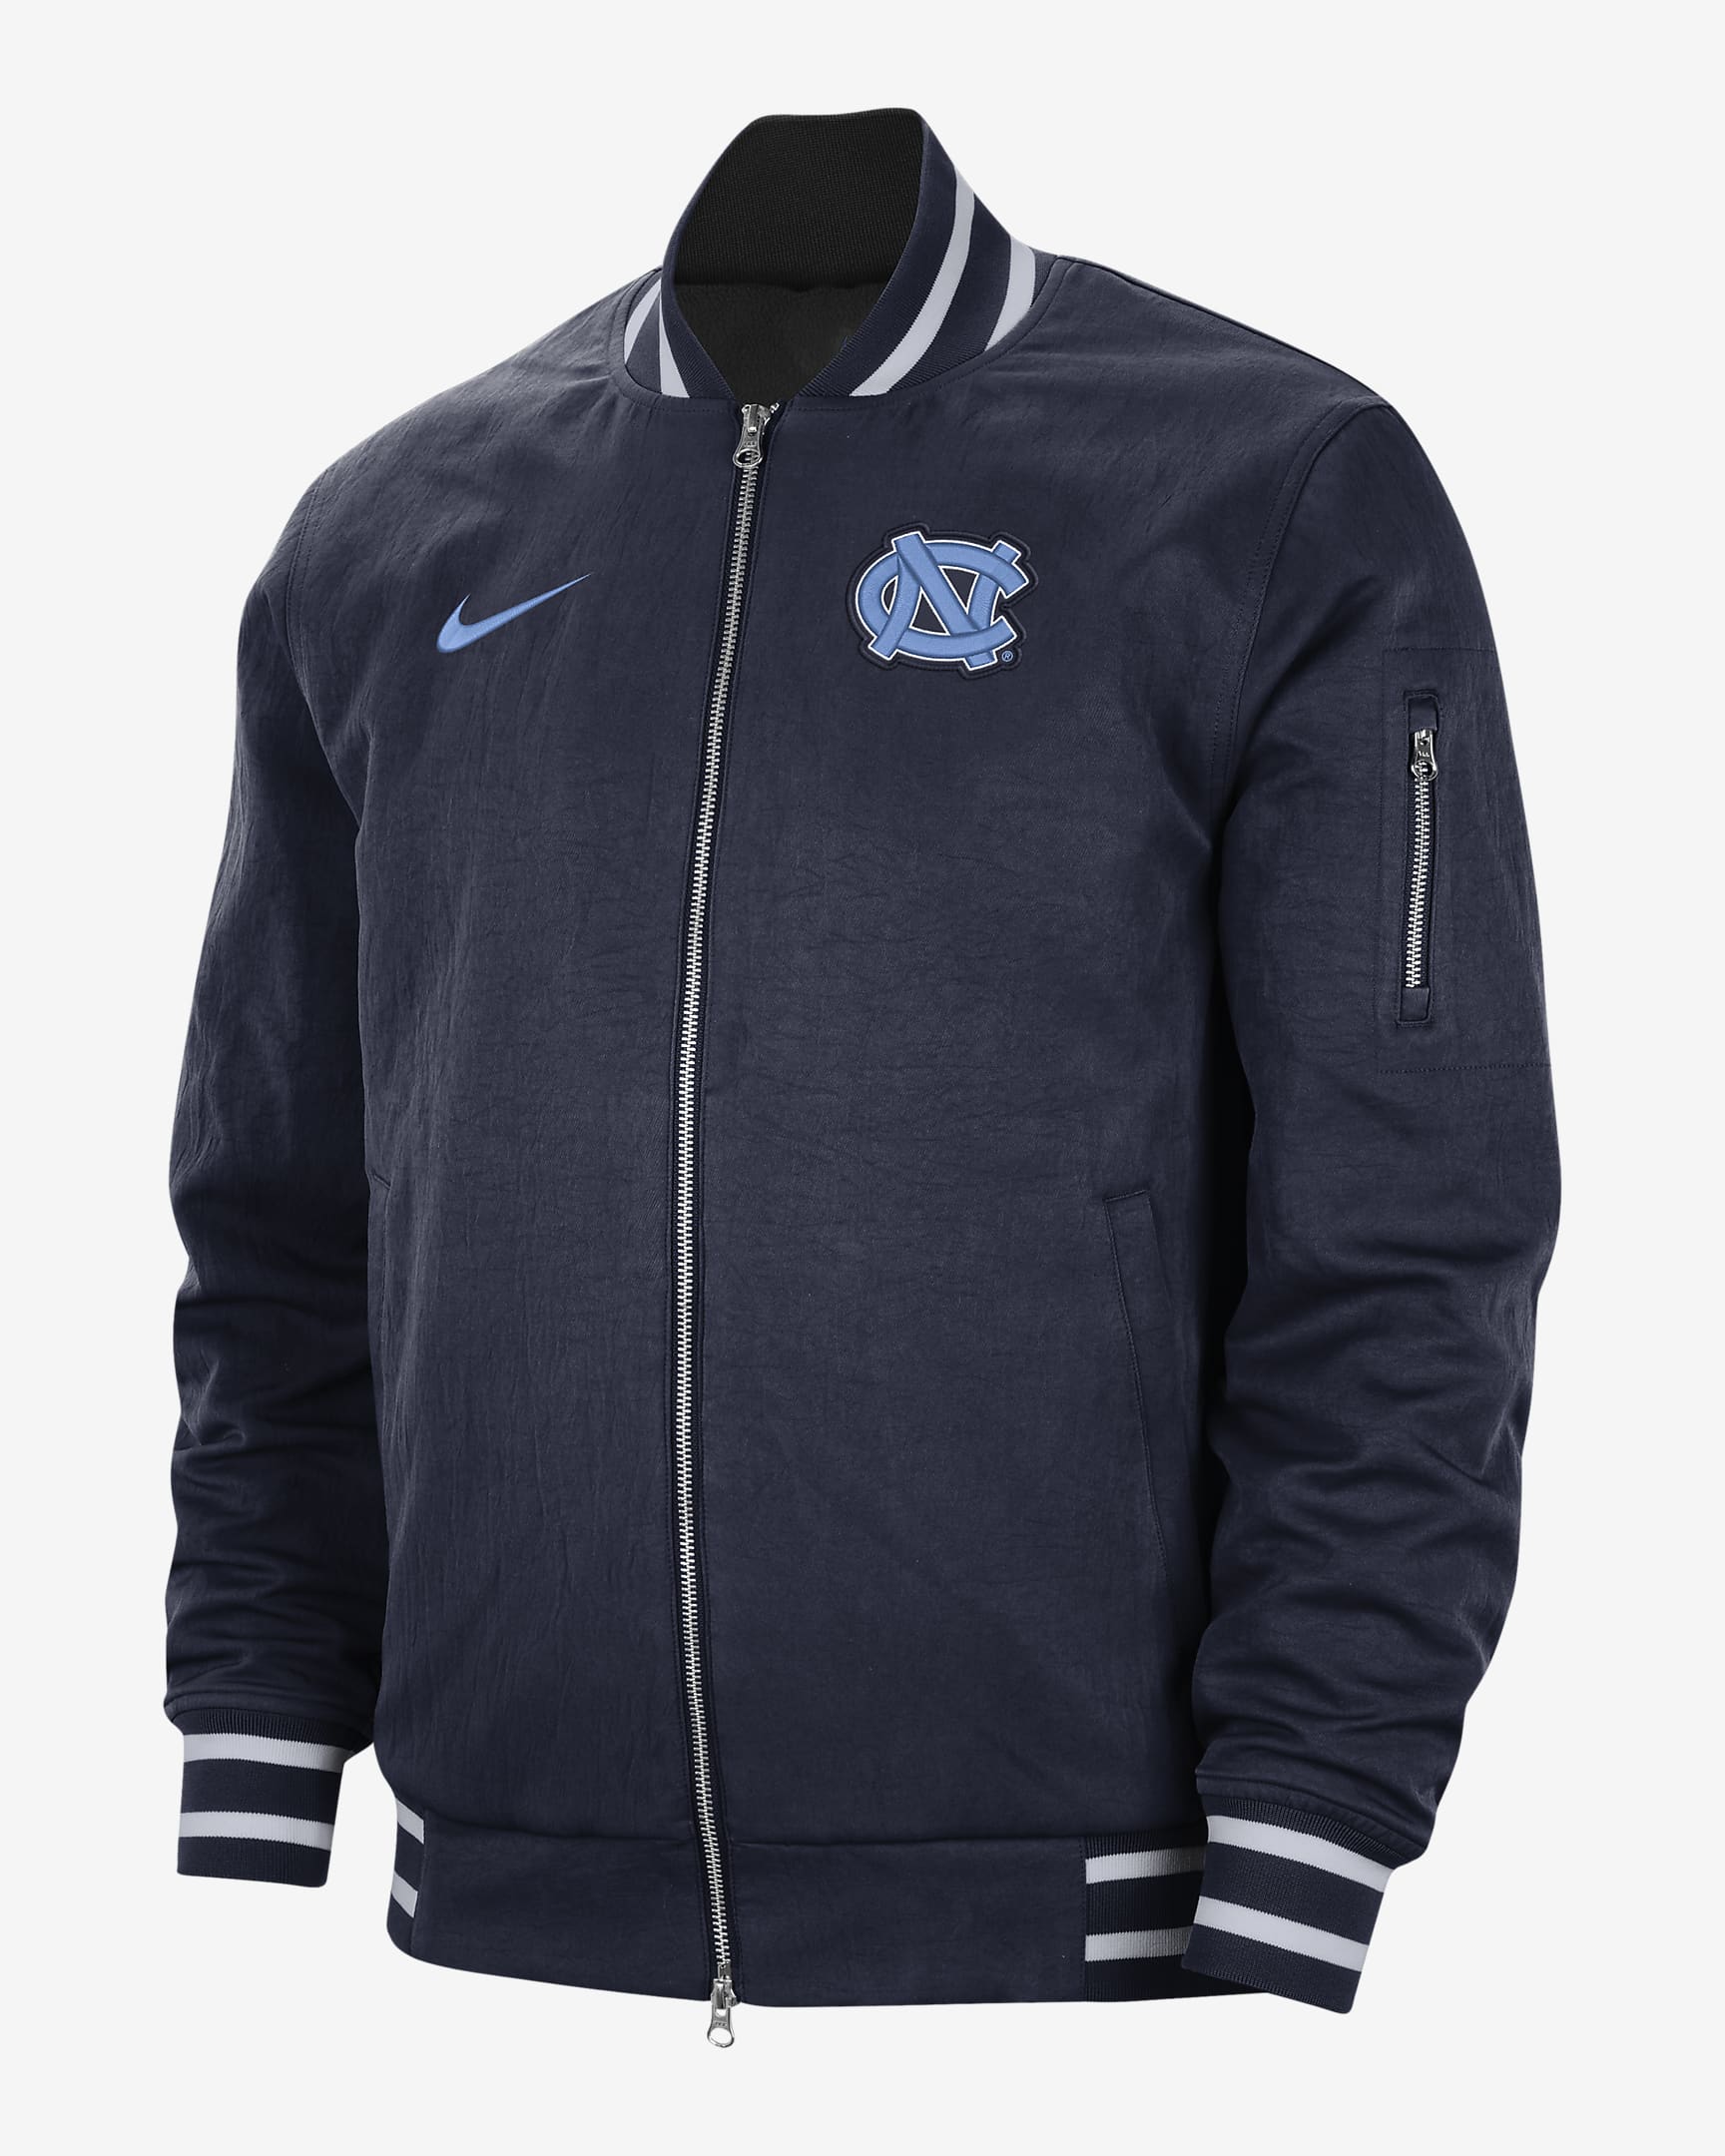 UNC Men's Nike College Bomber Jacket. Nike.com